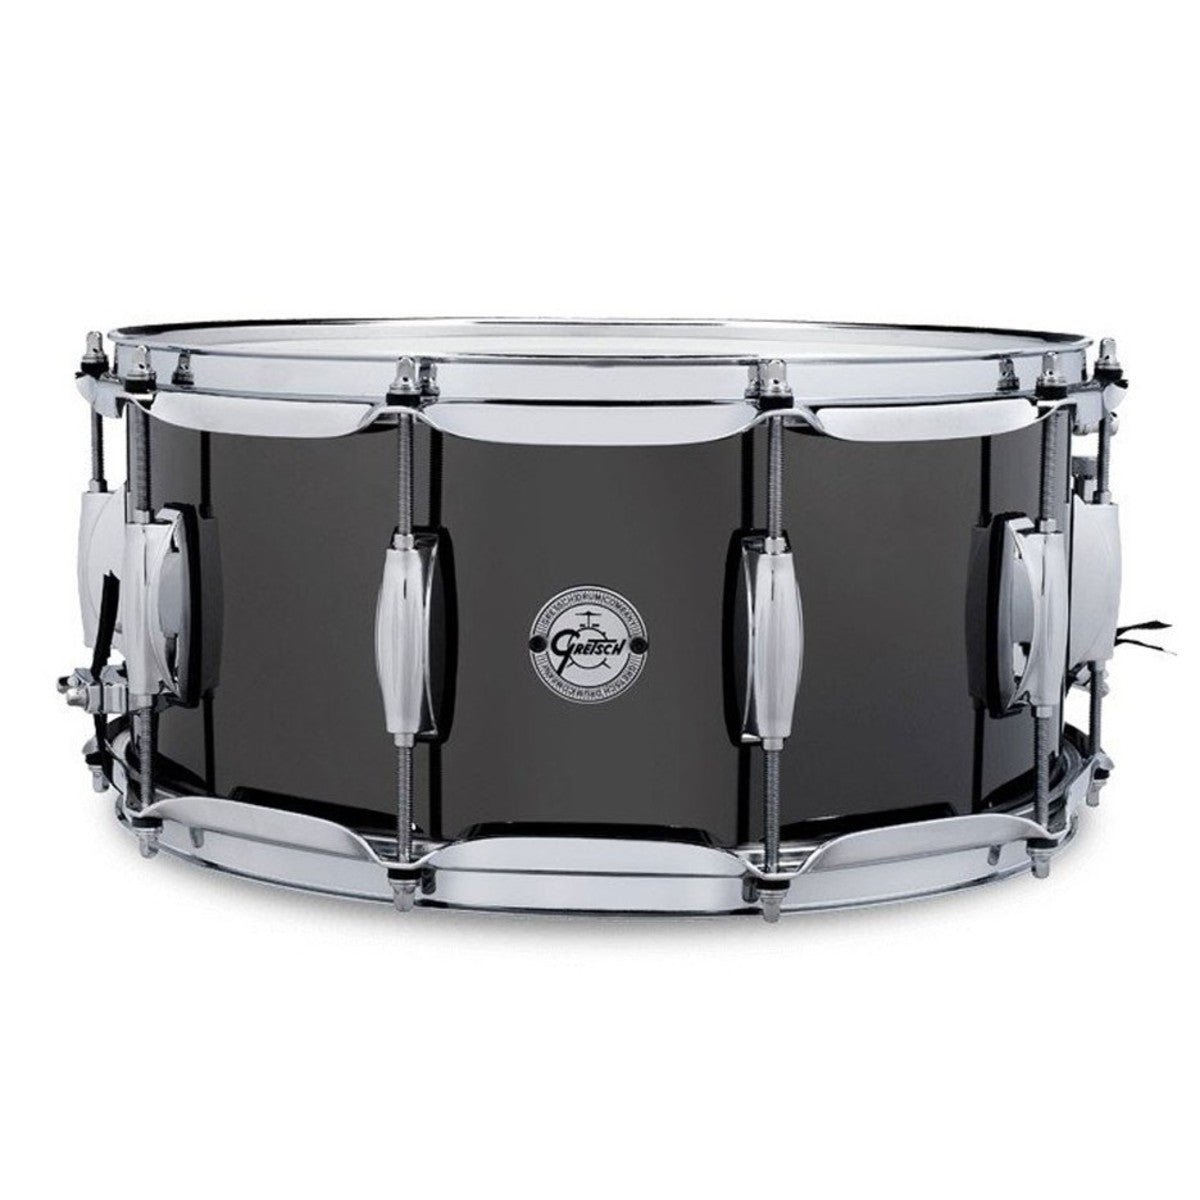 Gretsch "Full Range" 14"x6.5" Black Nickel Over Steel Snare Drum